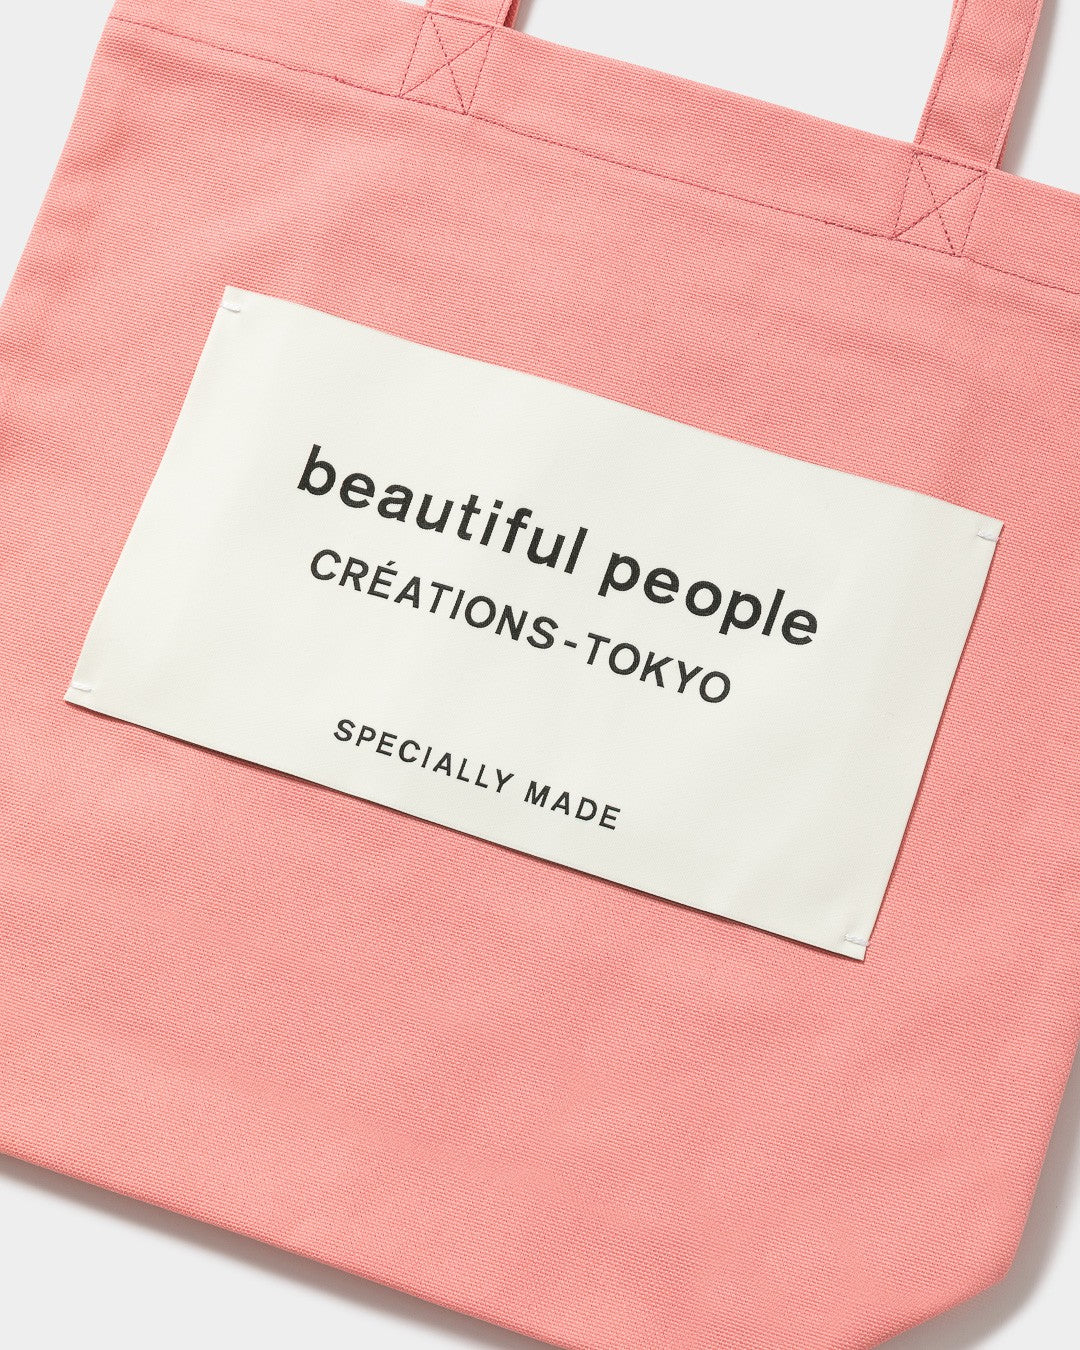 beautiful people （ビューティフルピープル）/ SDGs name tag tote bag (ネーム トートバッグ) / ピンク